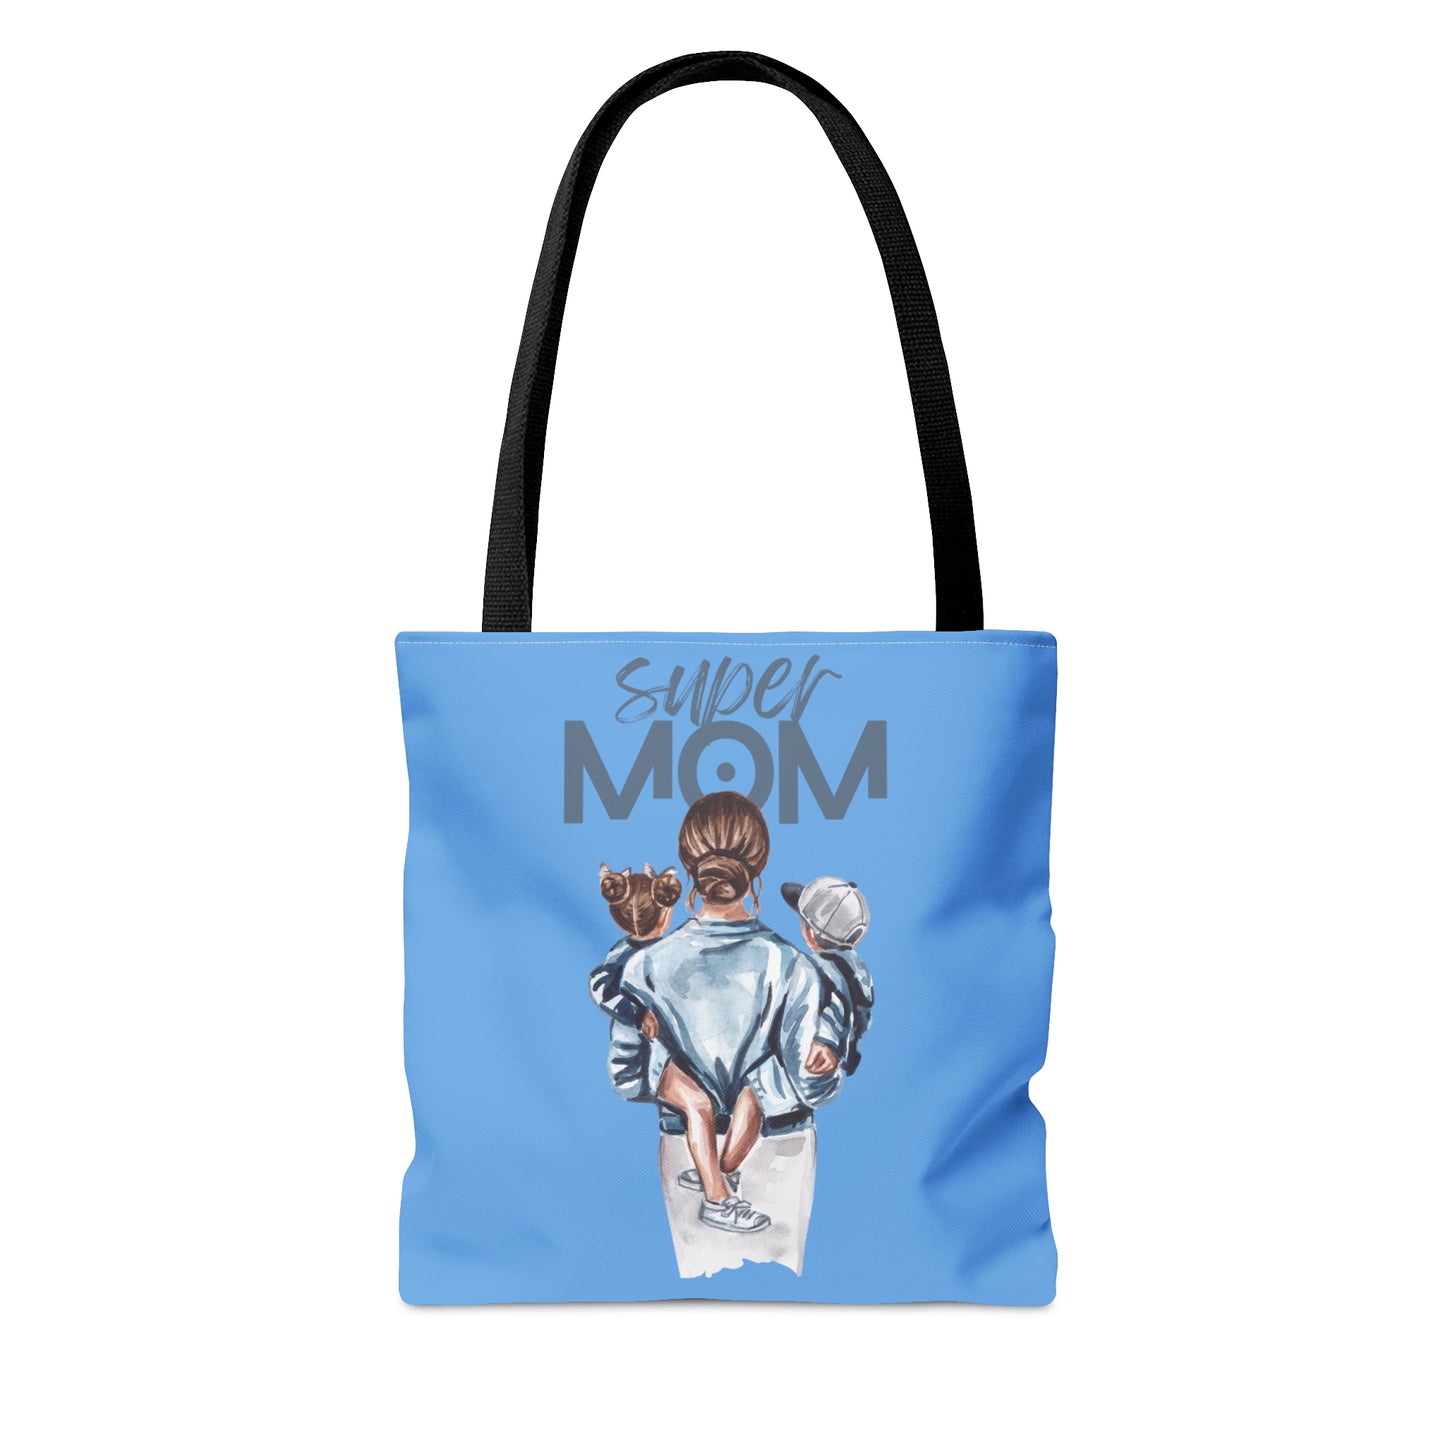 Super Mom - Tote Bag